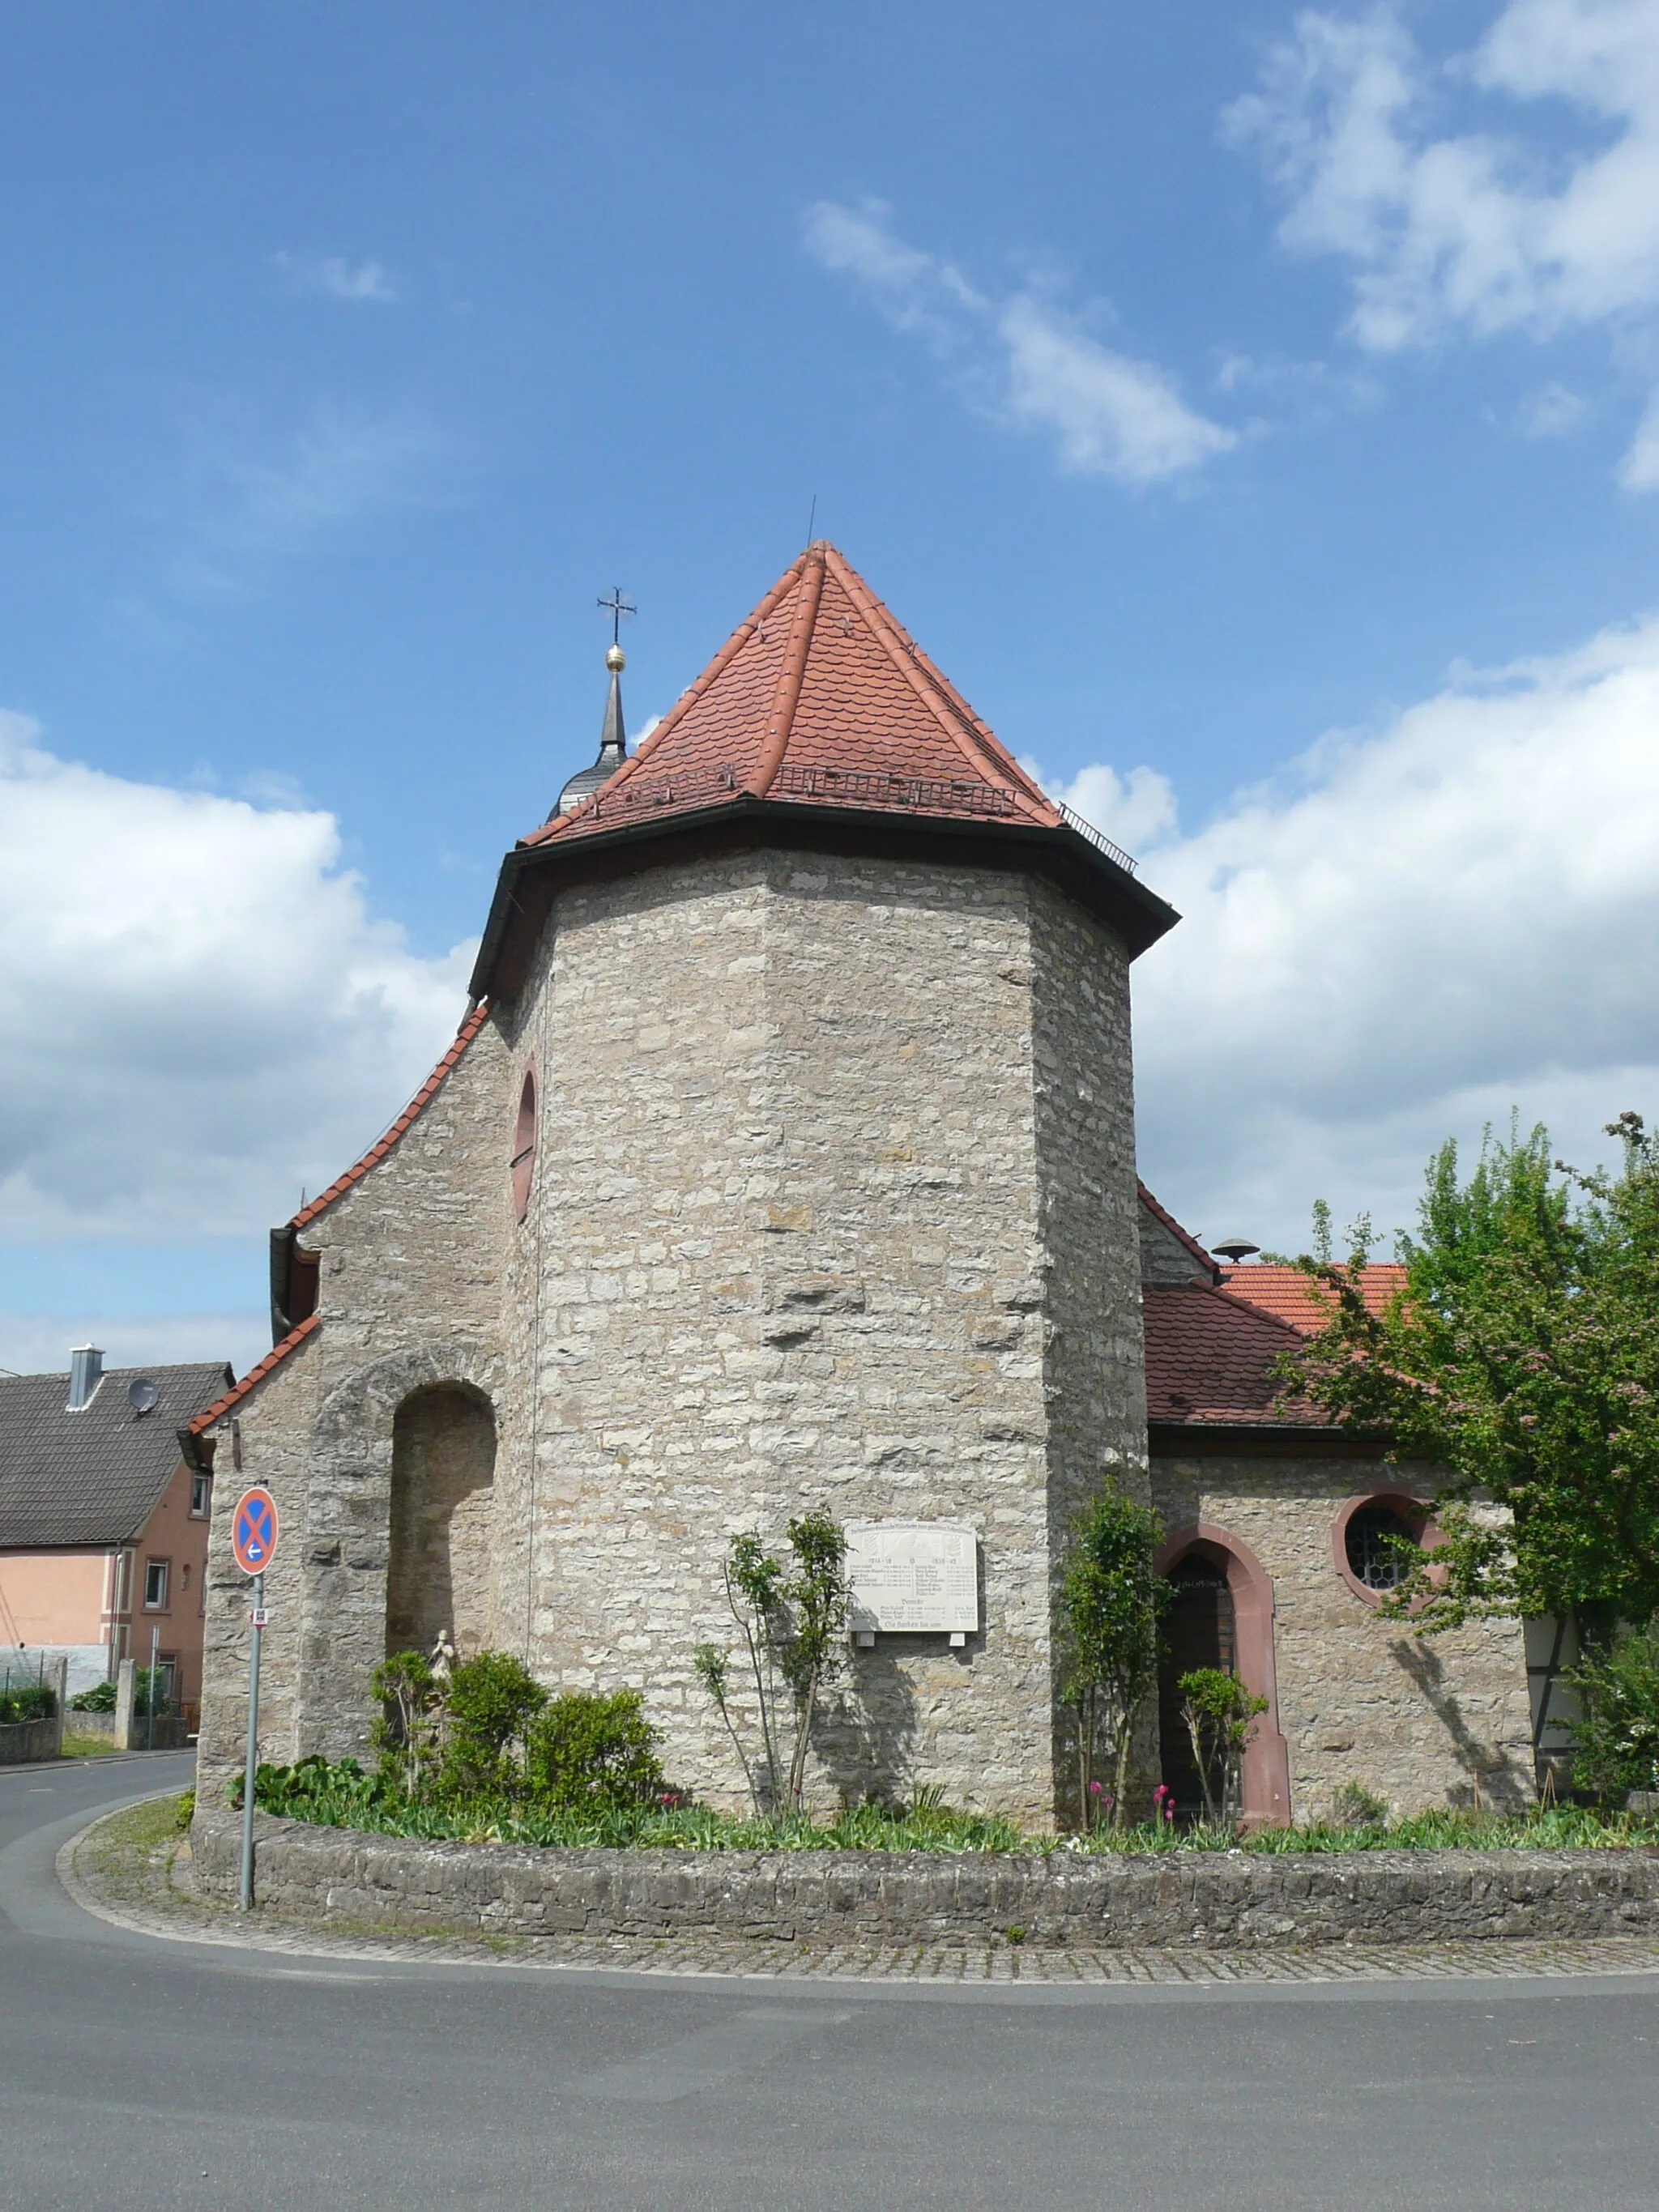 Photo showing: The catholic church St. Kilian in Mädelhofen, a quarter of Waldbüttelbrunn.